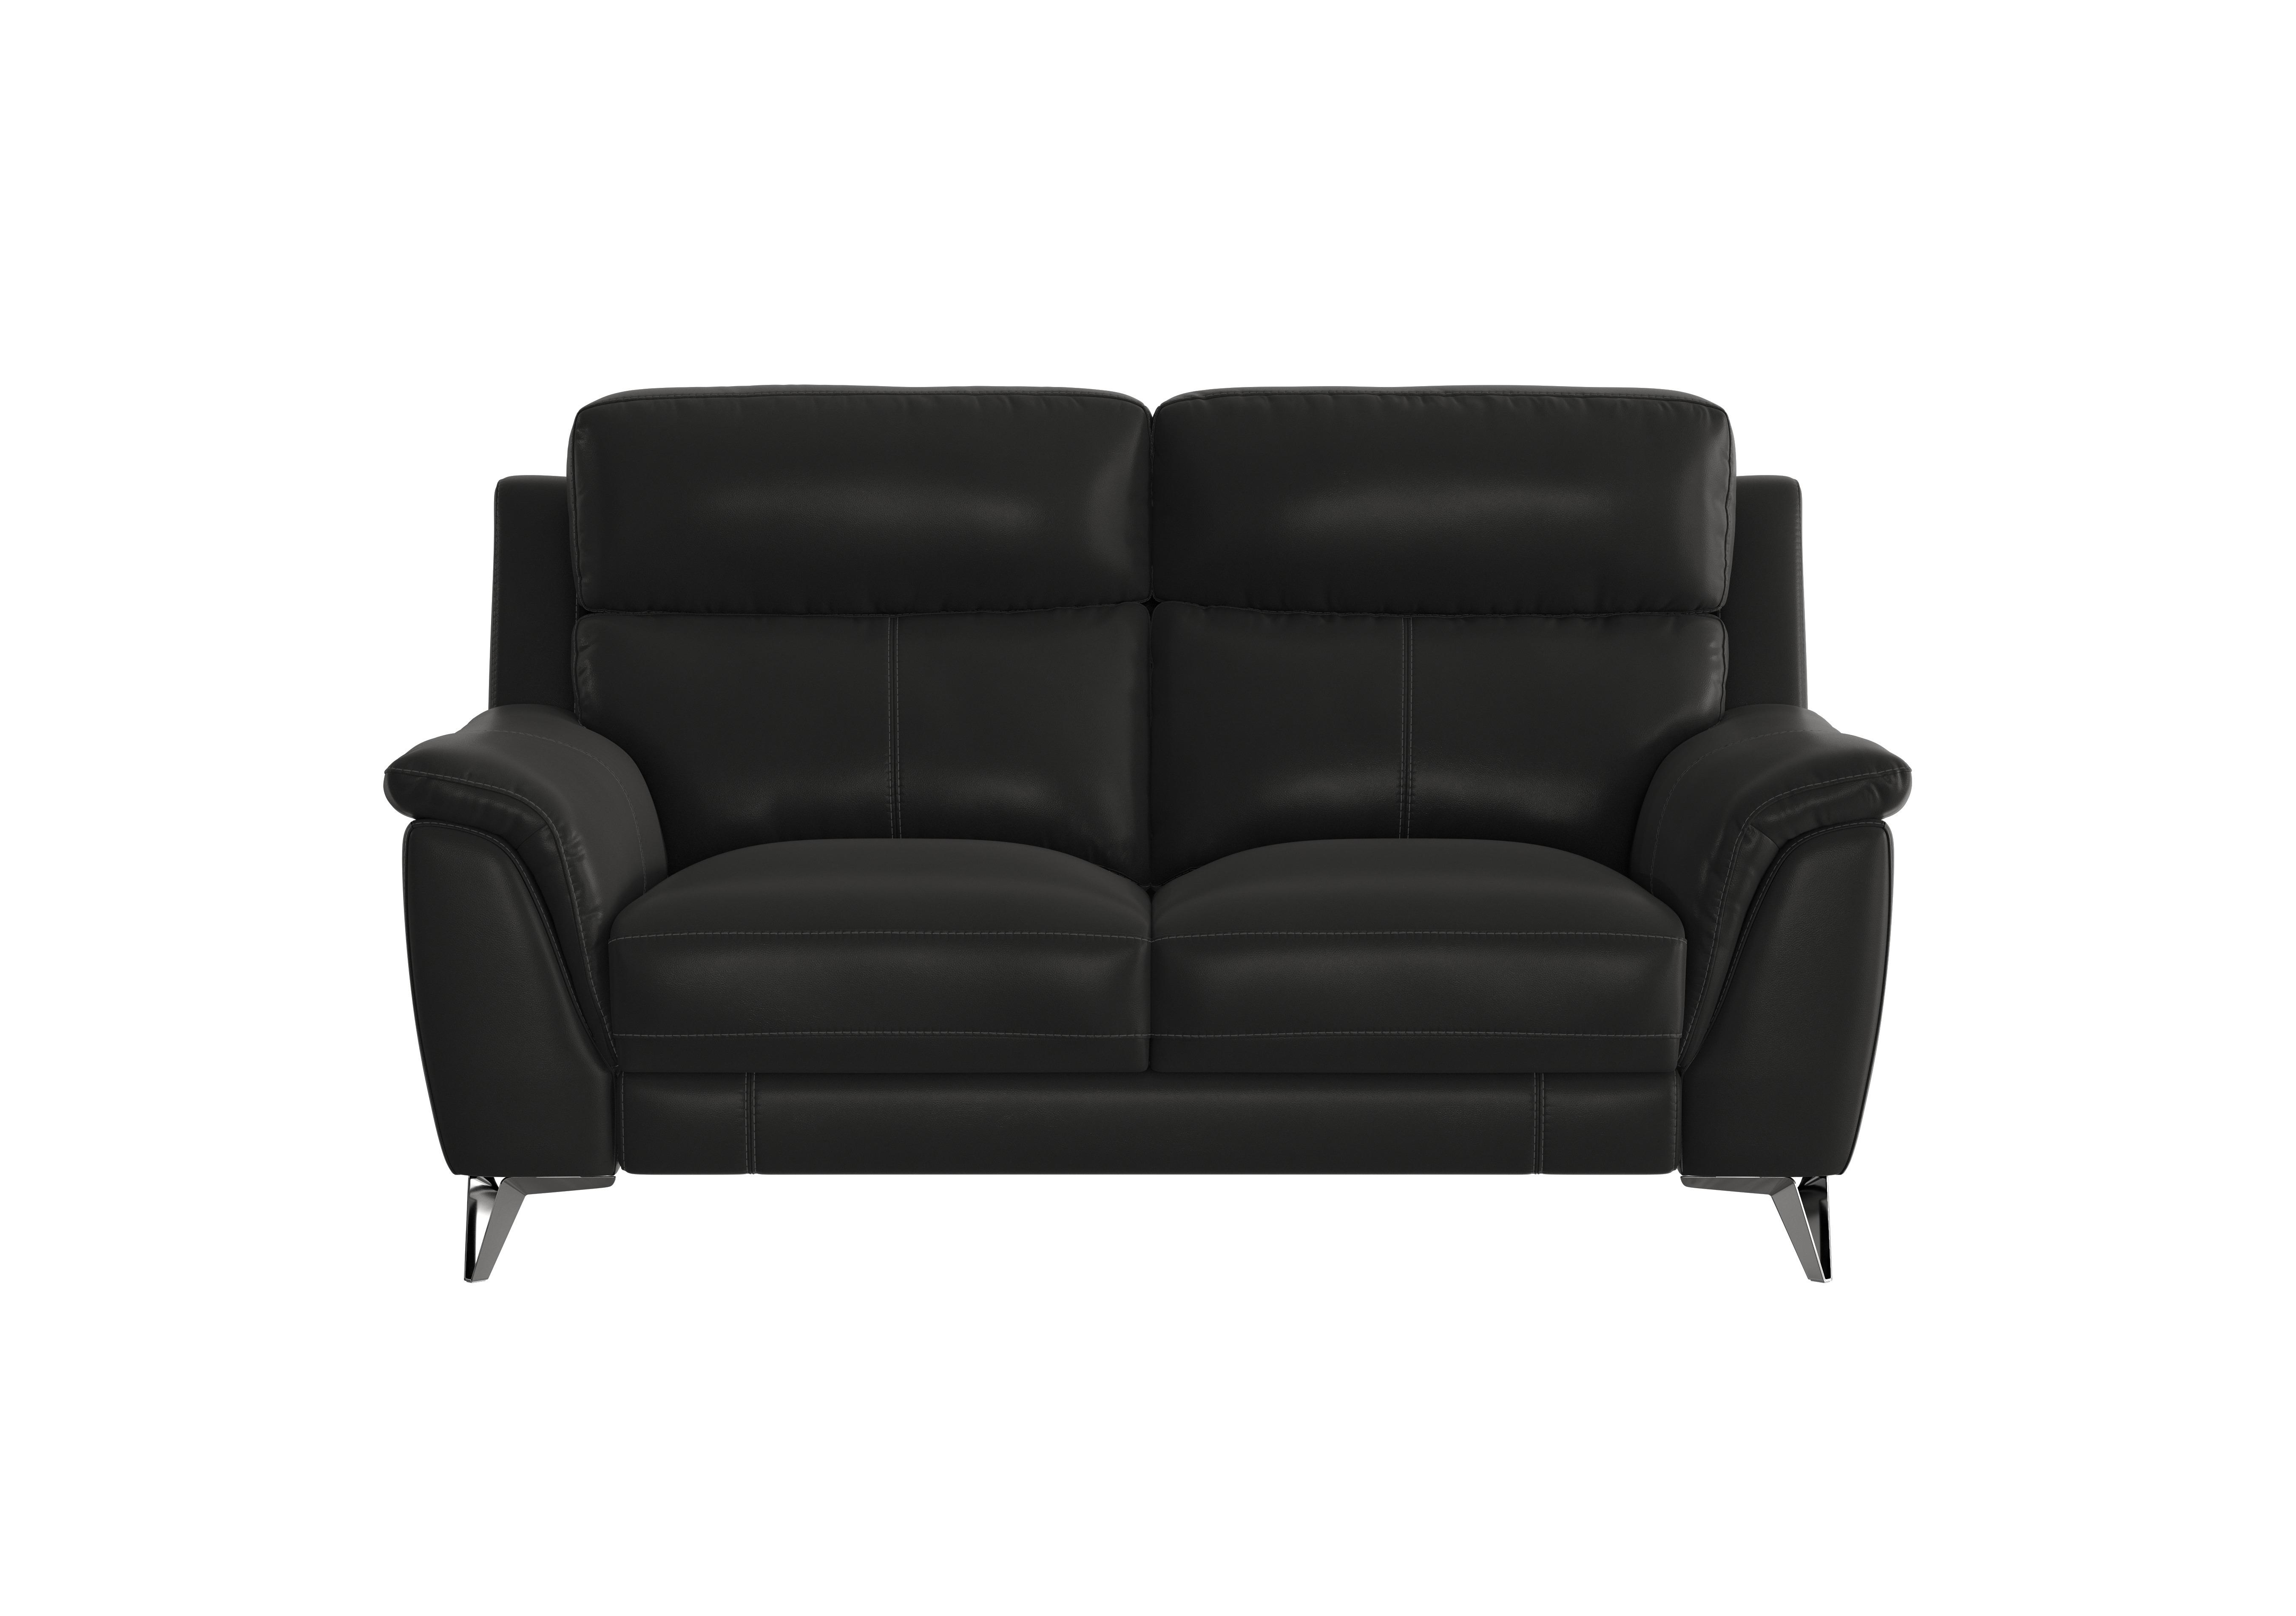 Contempo 2 Seater Leather Sofa in Bv-3500 Classic Black on Furniture Village